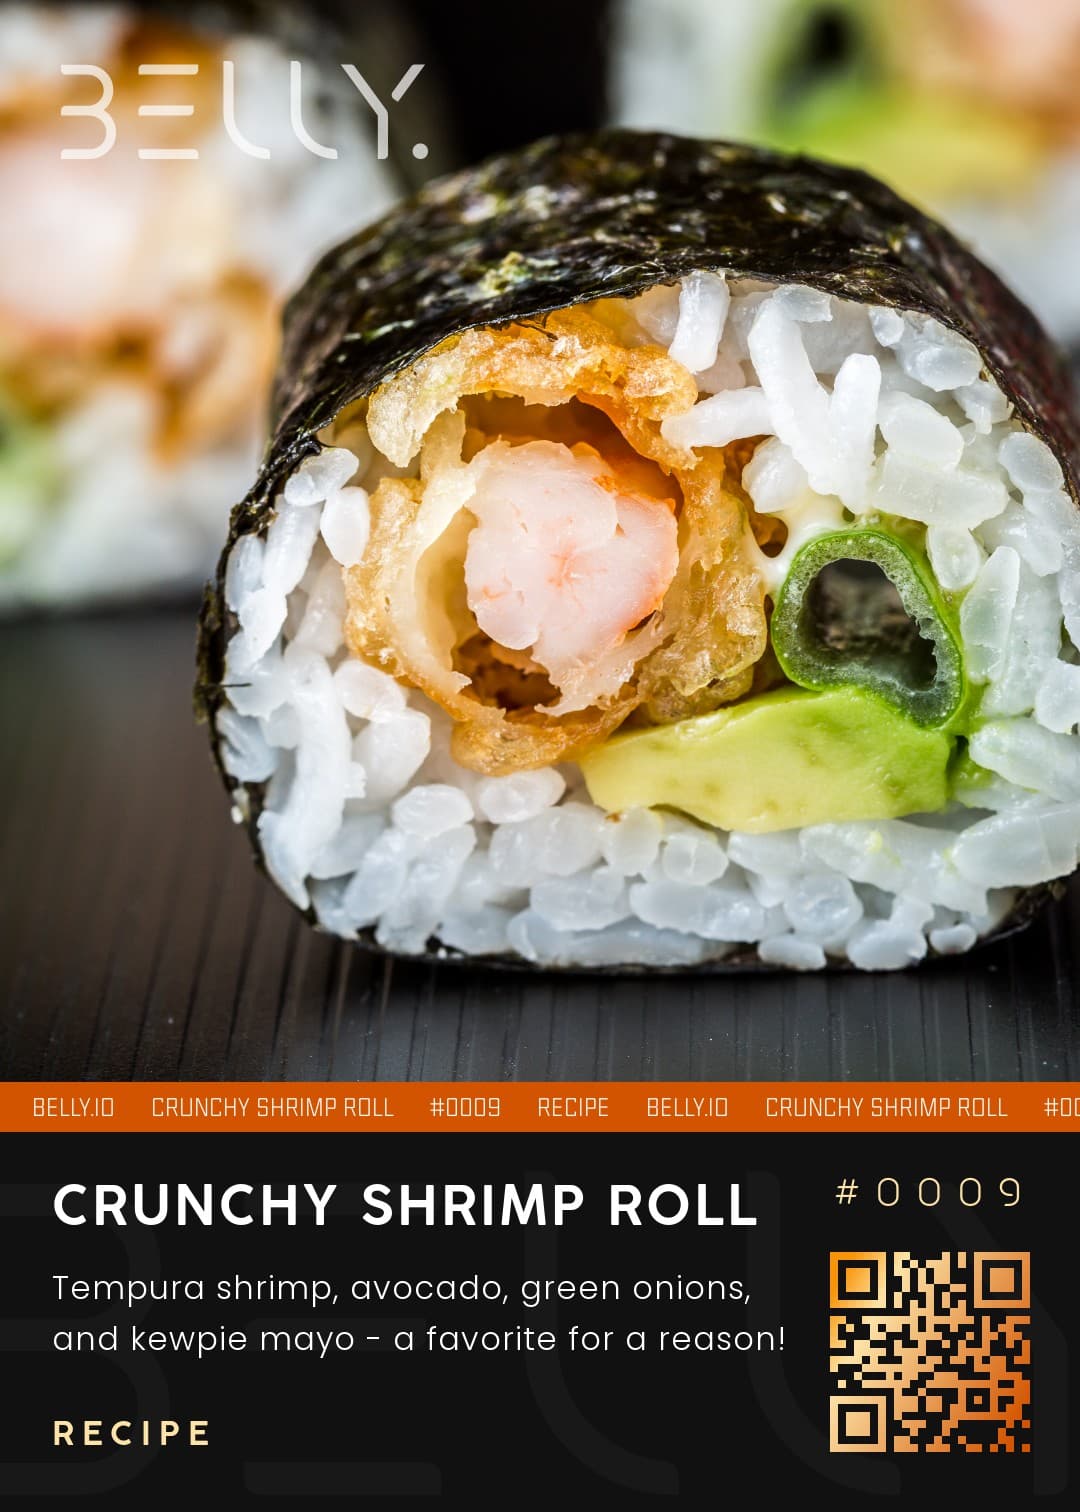 Crunchy Shrimp Roll - Tempura shrimp, avocado, green onions, and kewpie mayo - a favorite for a reason!